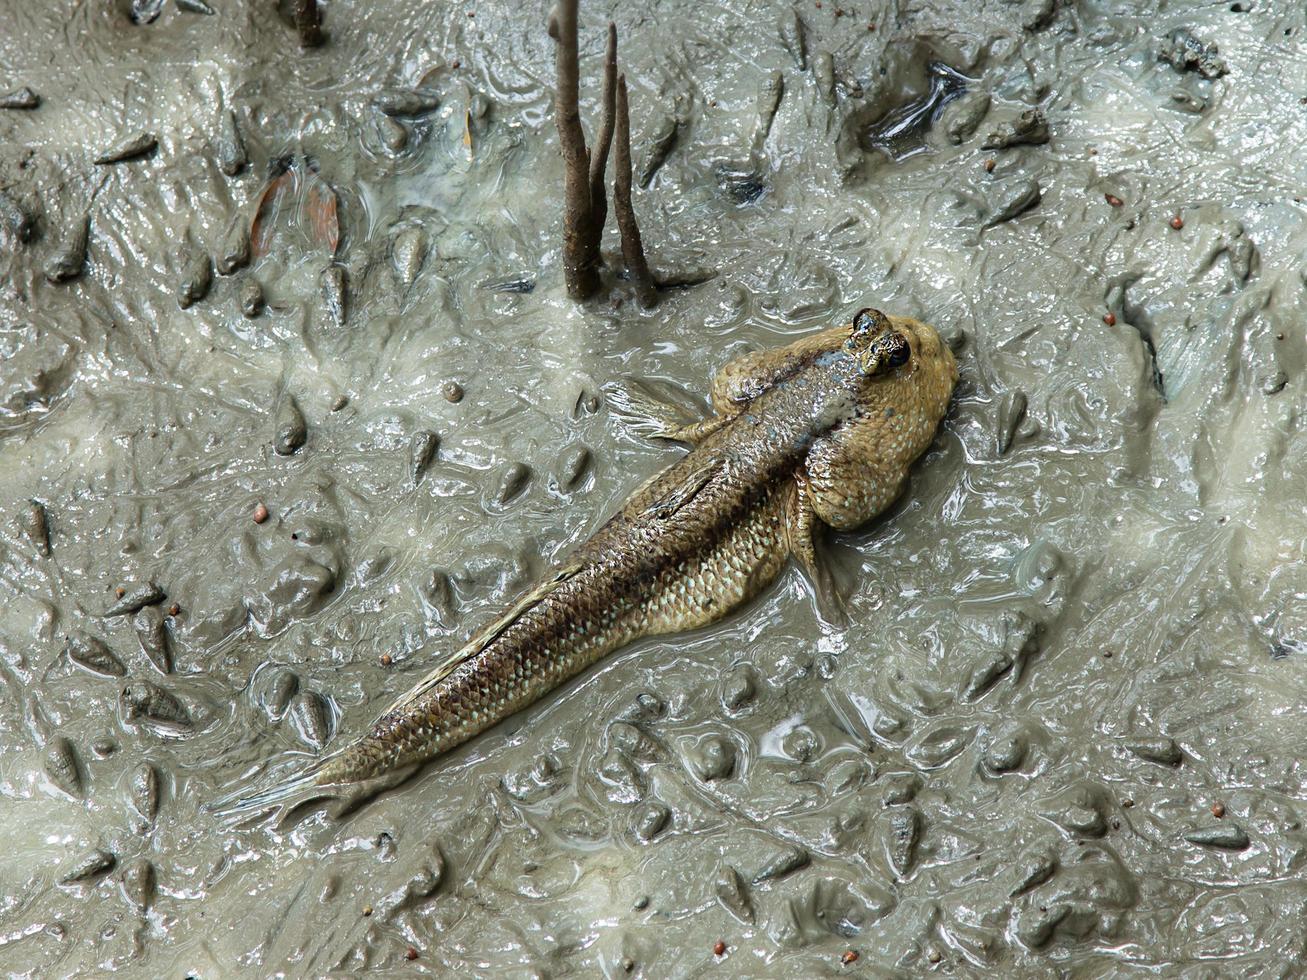 mudskipper o boleophthalmus boddarti, sul fango nella foresta di mangrovie foto